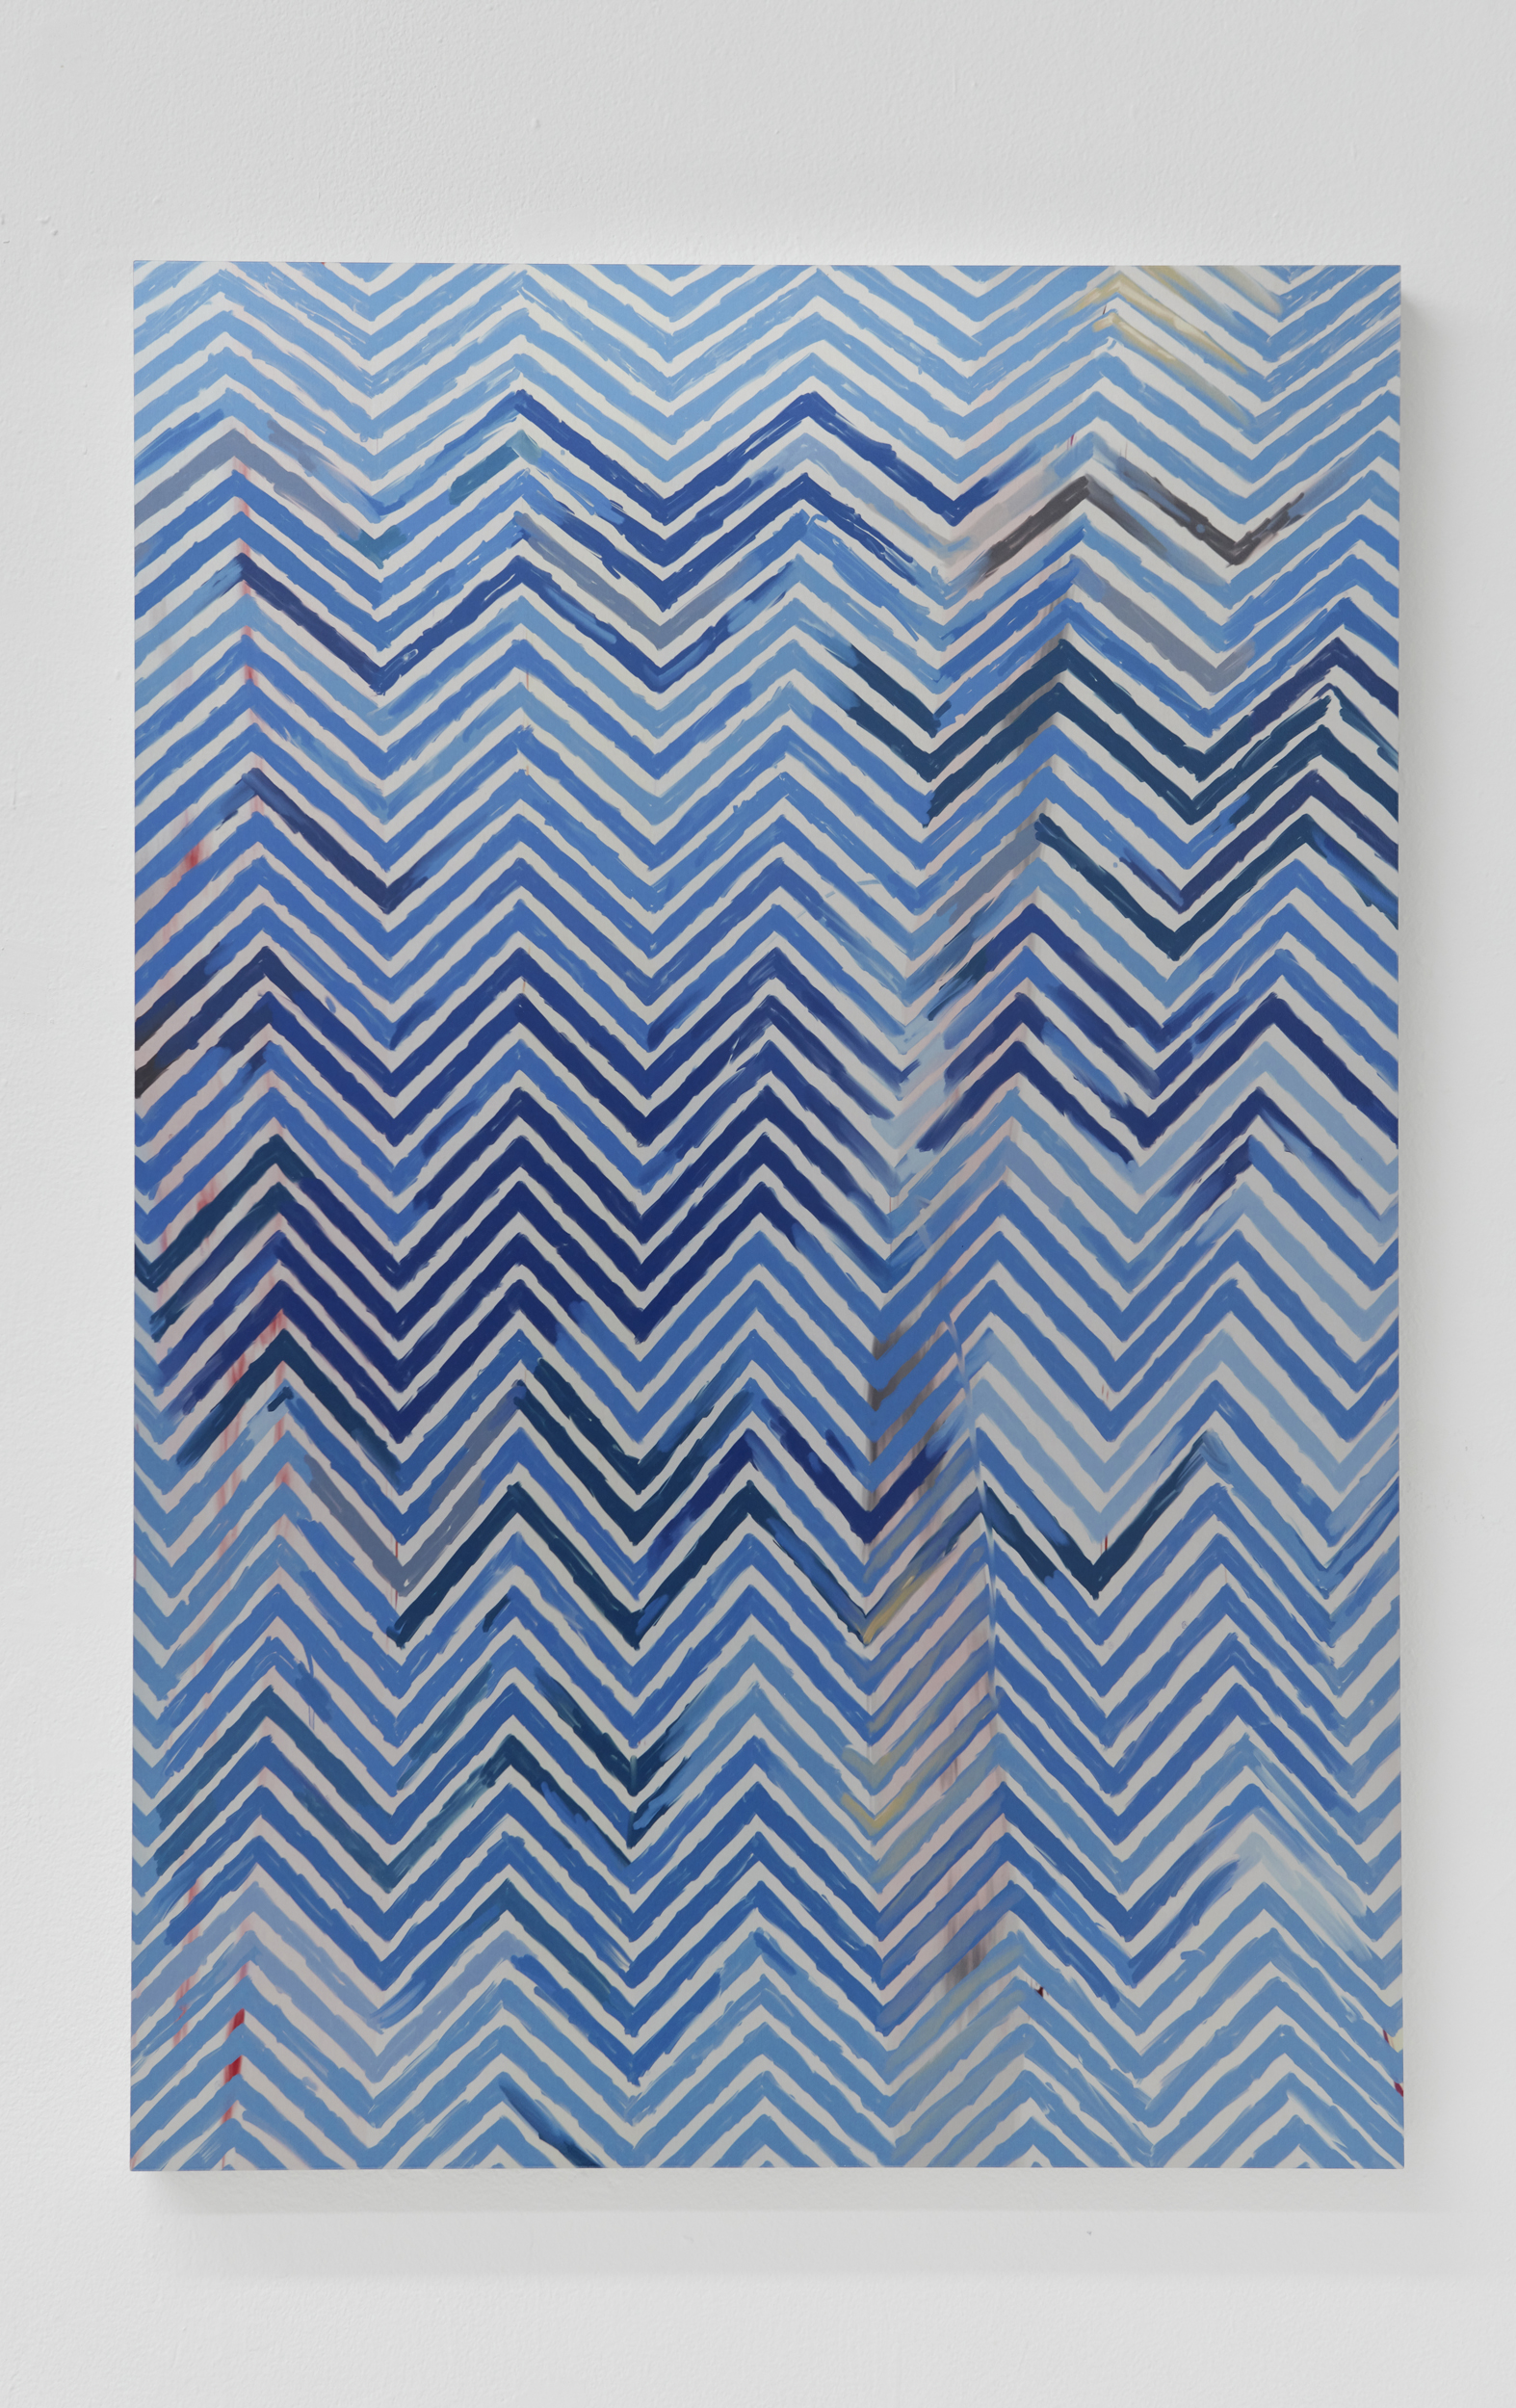   Mental Connecticut,  2018. Diffusion dye, aluminum print. 36 x 24 inches. 